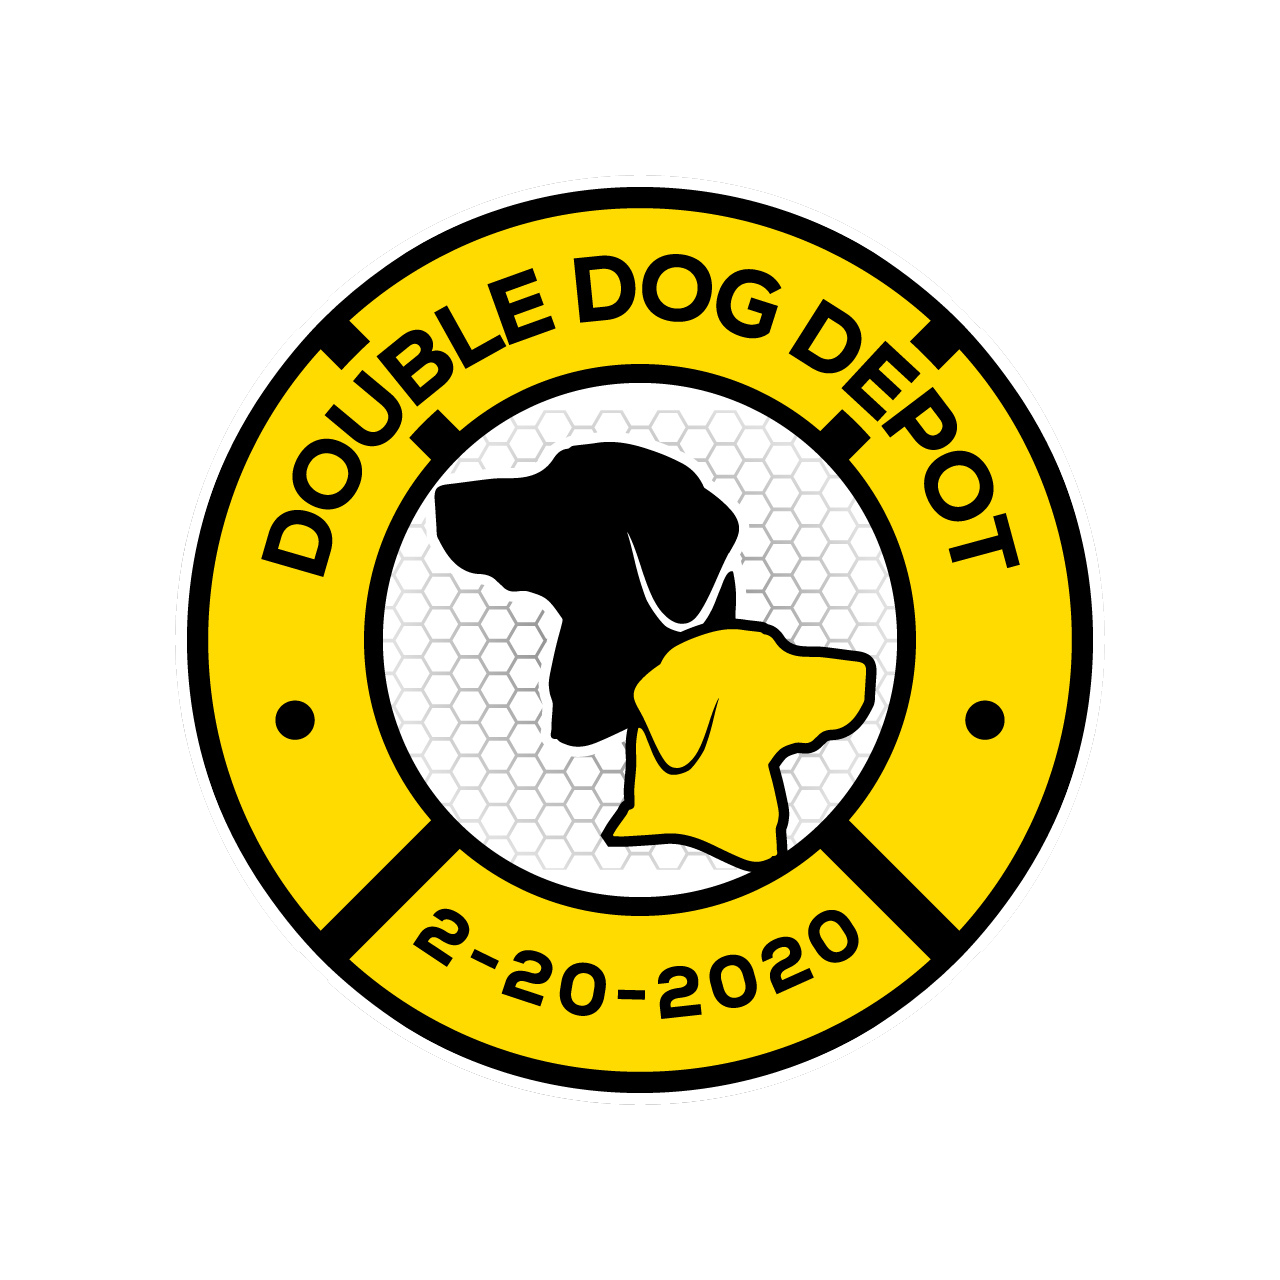 Double Dog Depot®